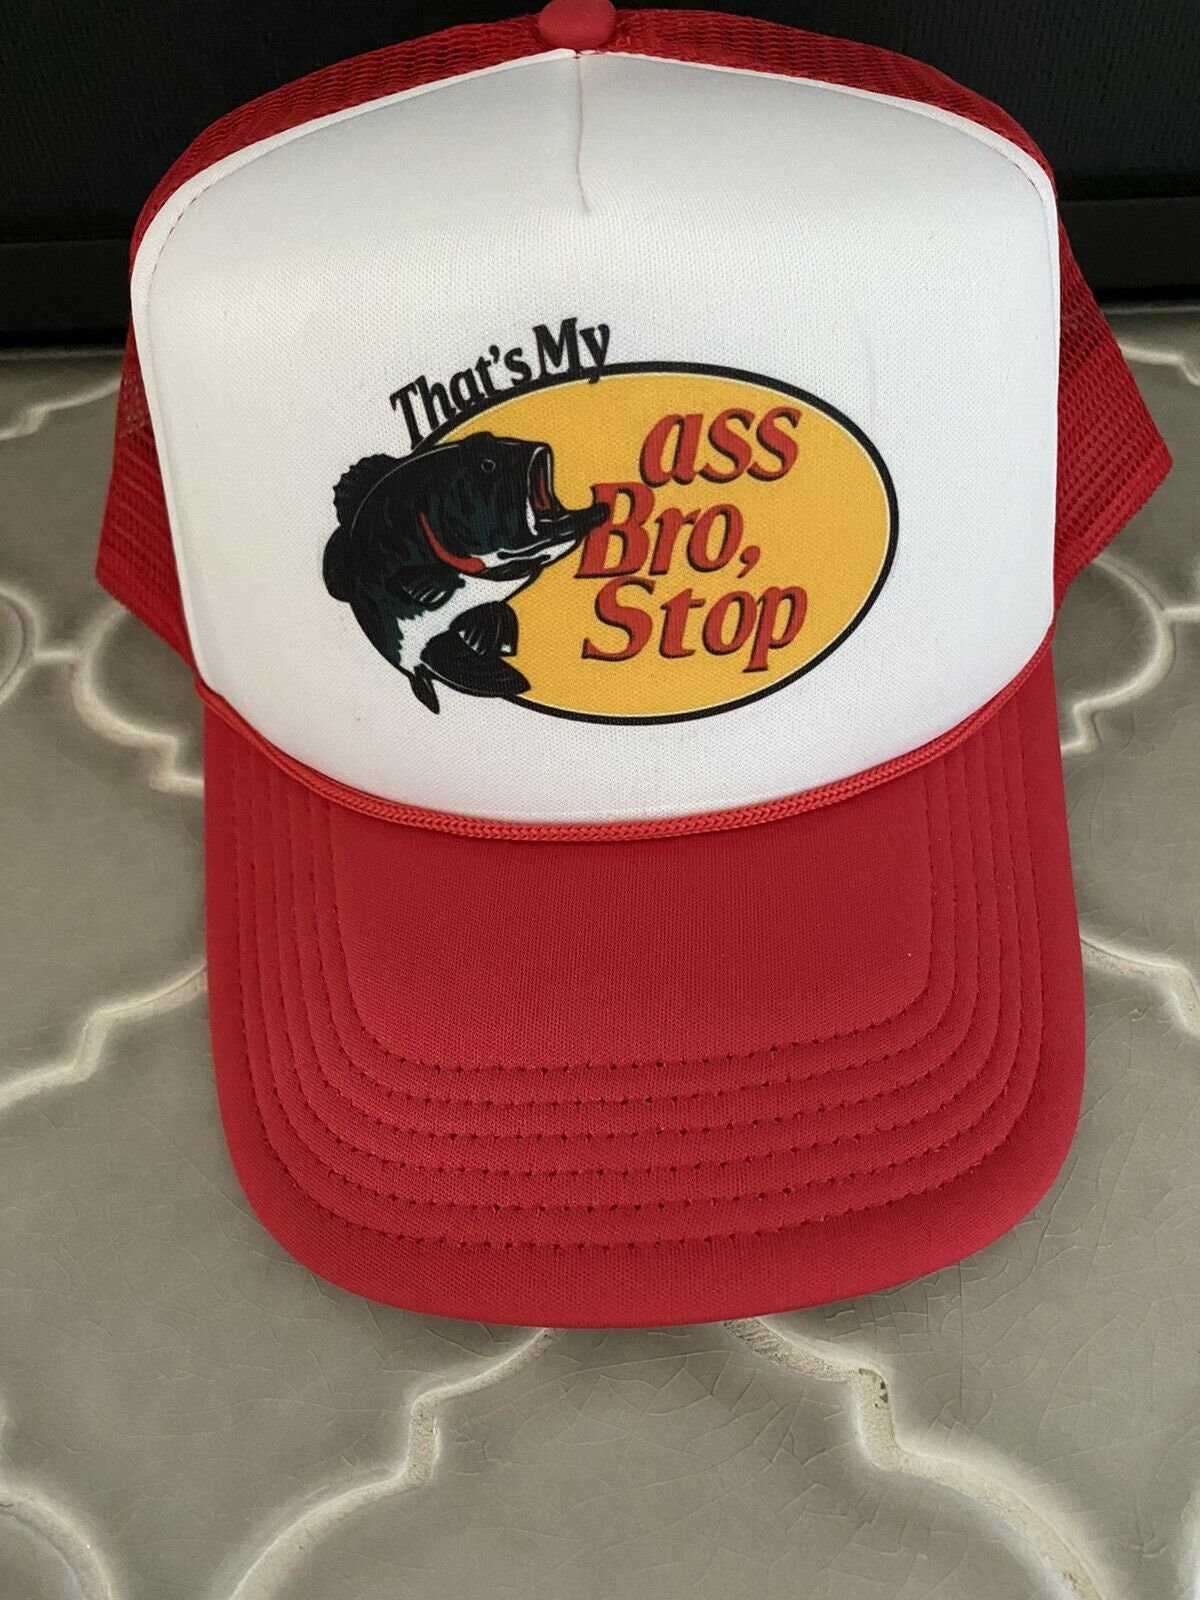 That's My Ass Bro Stop Custom Trucker Hat bass Pro Shop Spoof 